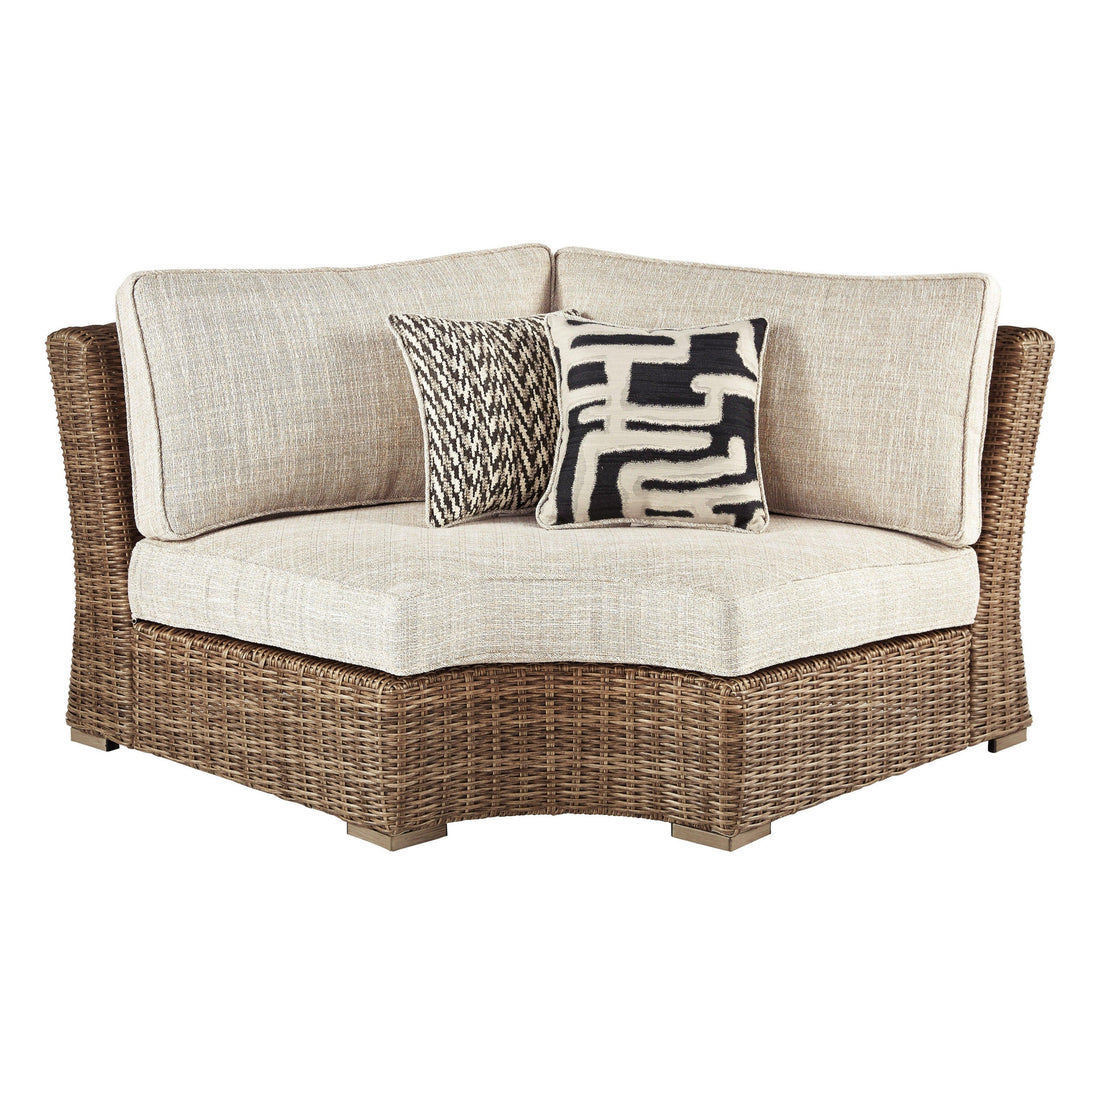 Beachcroft Curved Corner Chair with Cushion Ash-P791-851